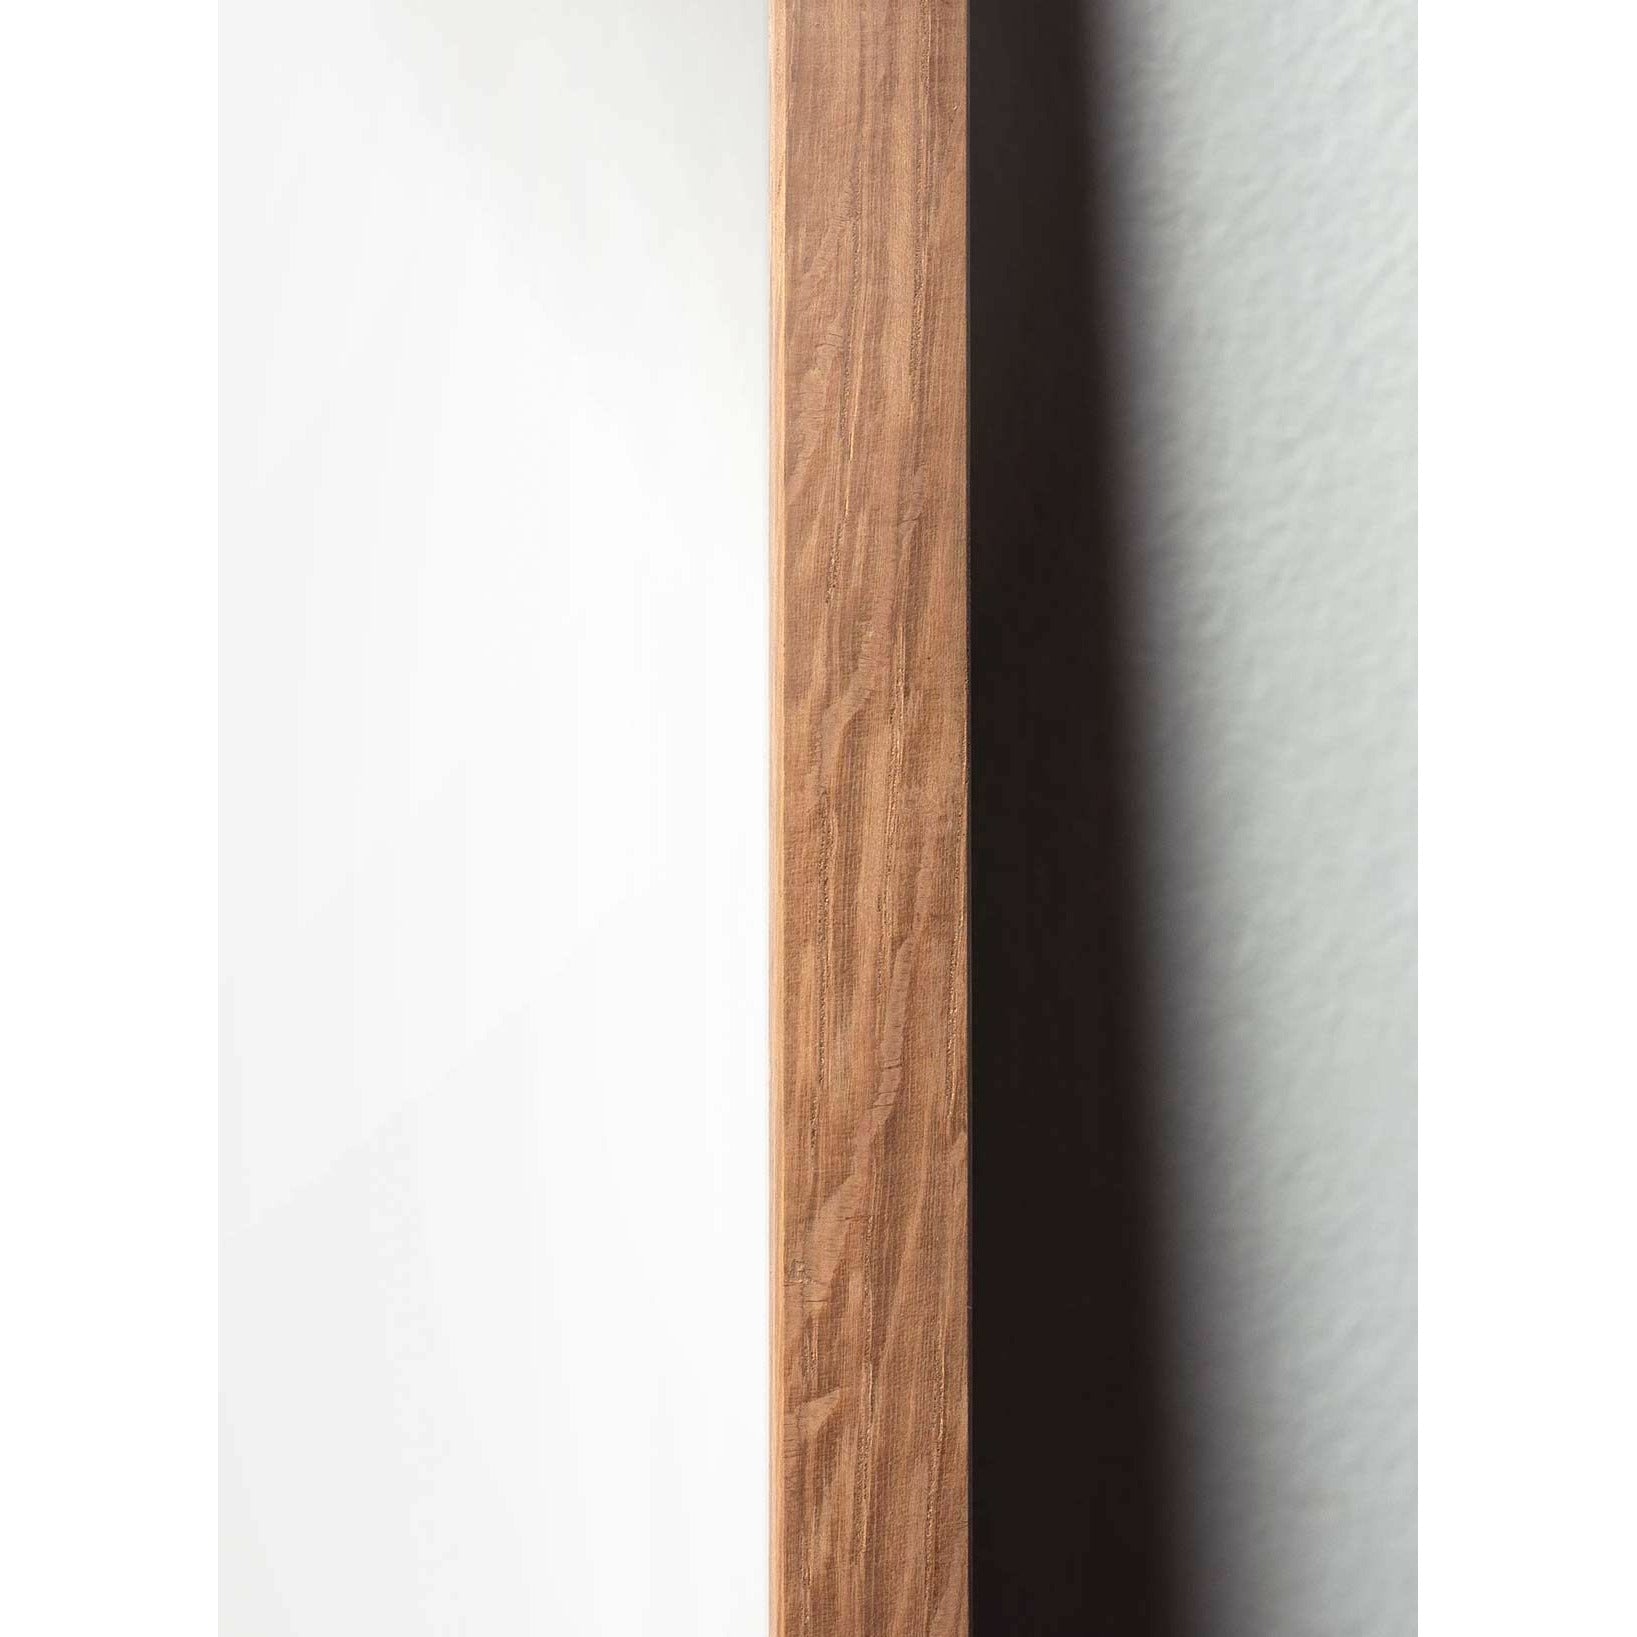 Póster clásico de cono de pino de creación, marco hecho de madera clara de 30x40 cm, fondo de color arena